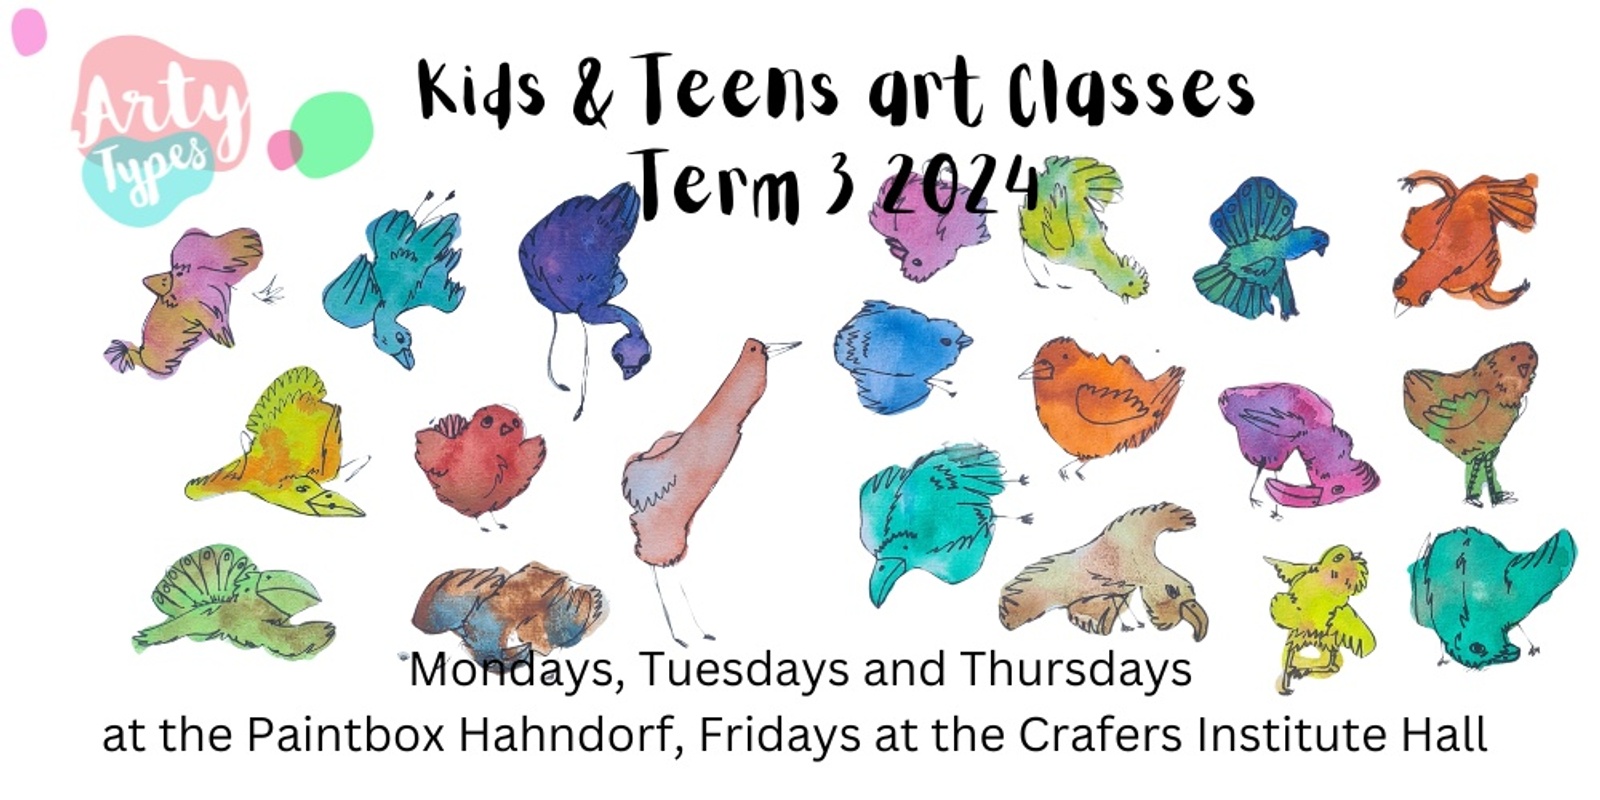 Banner image for Arty Types kids art classes Term 3 2024